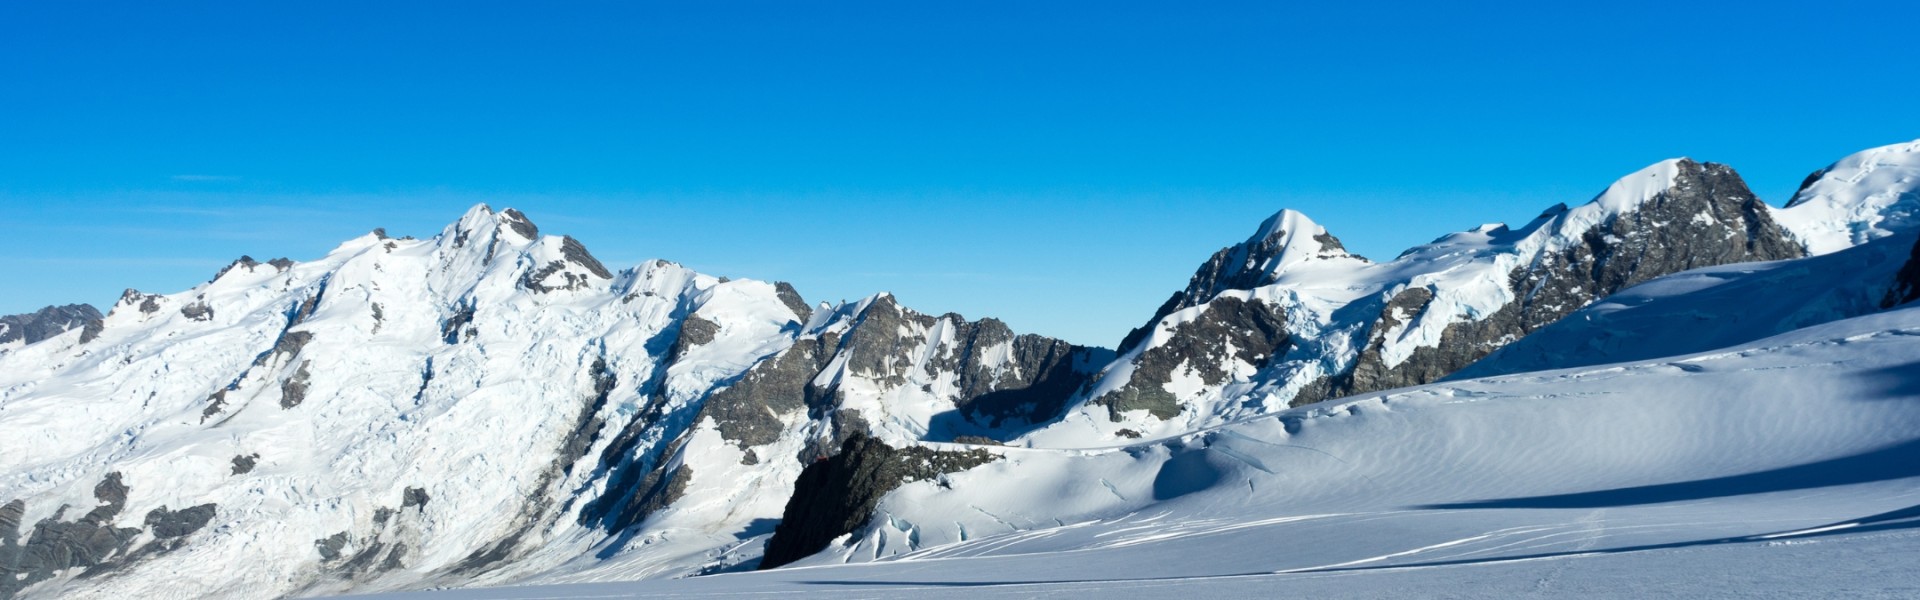 14 Tallest Mountain Peaks in the World exceeding 8000 meters